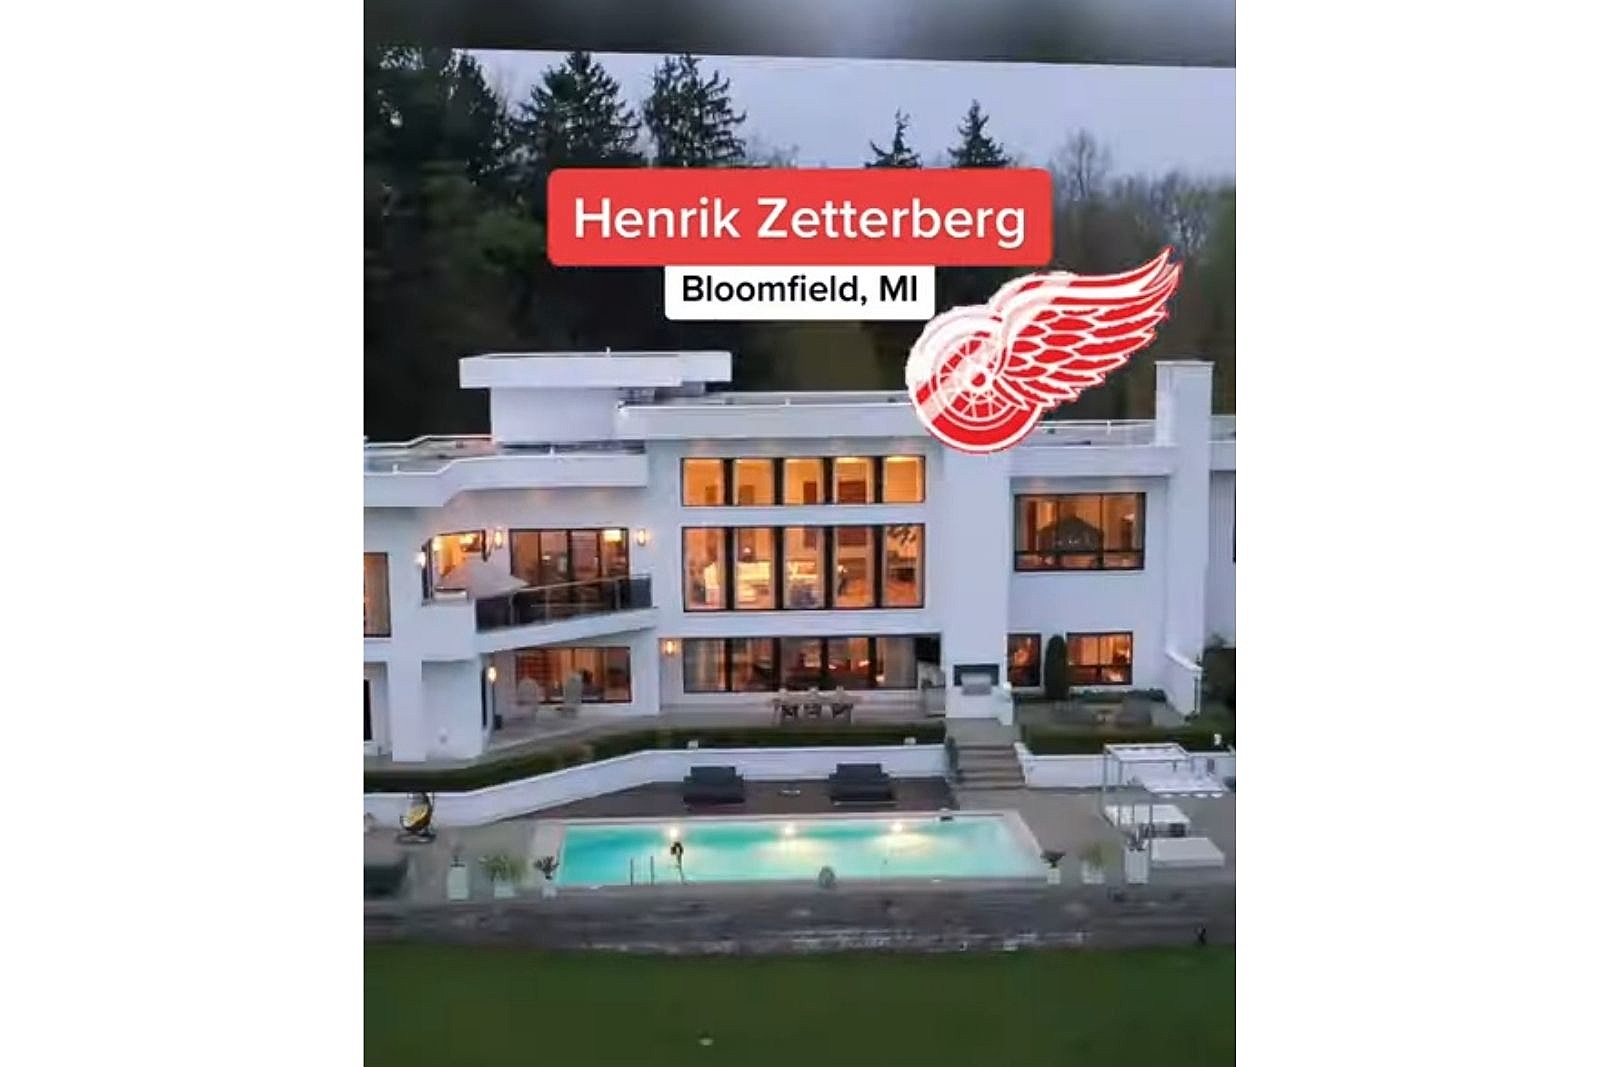 The Detroit Red Wings Should Retire Henrik Zetterberg's Number